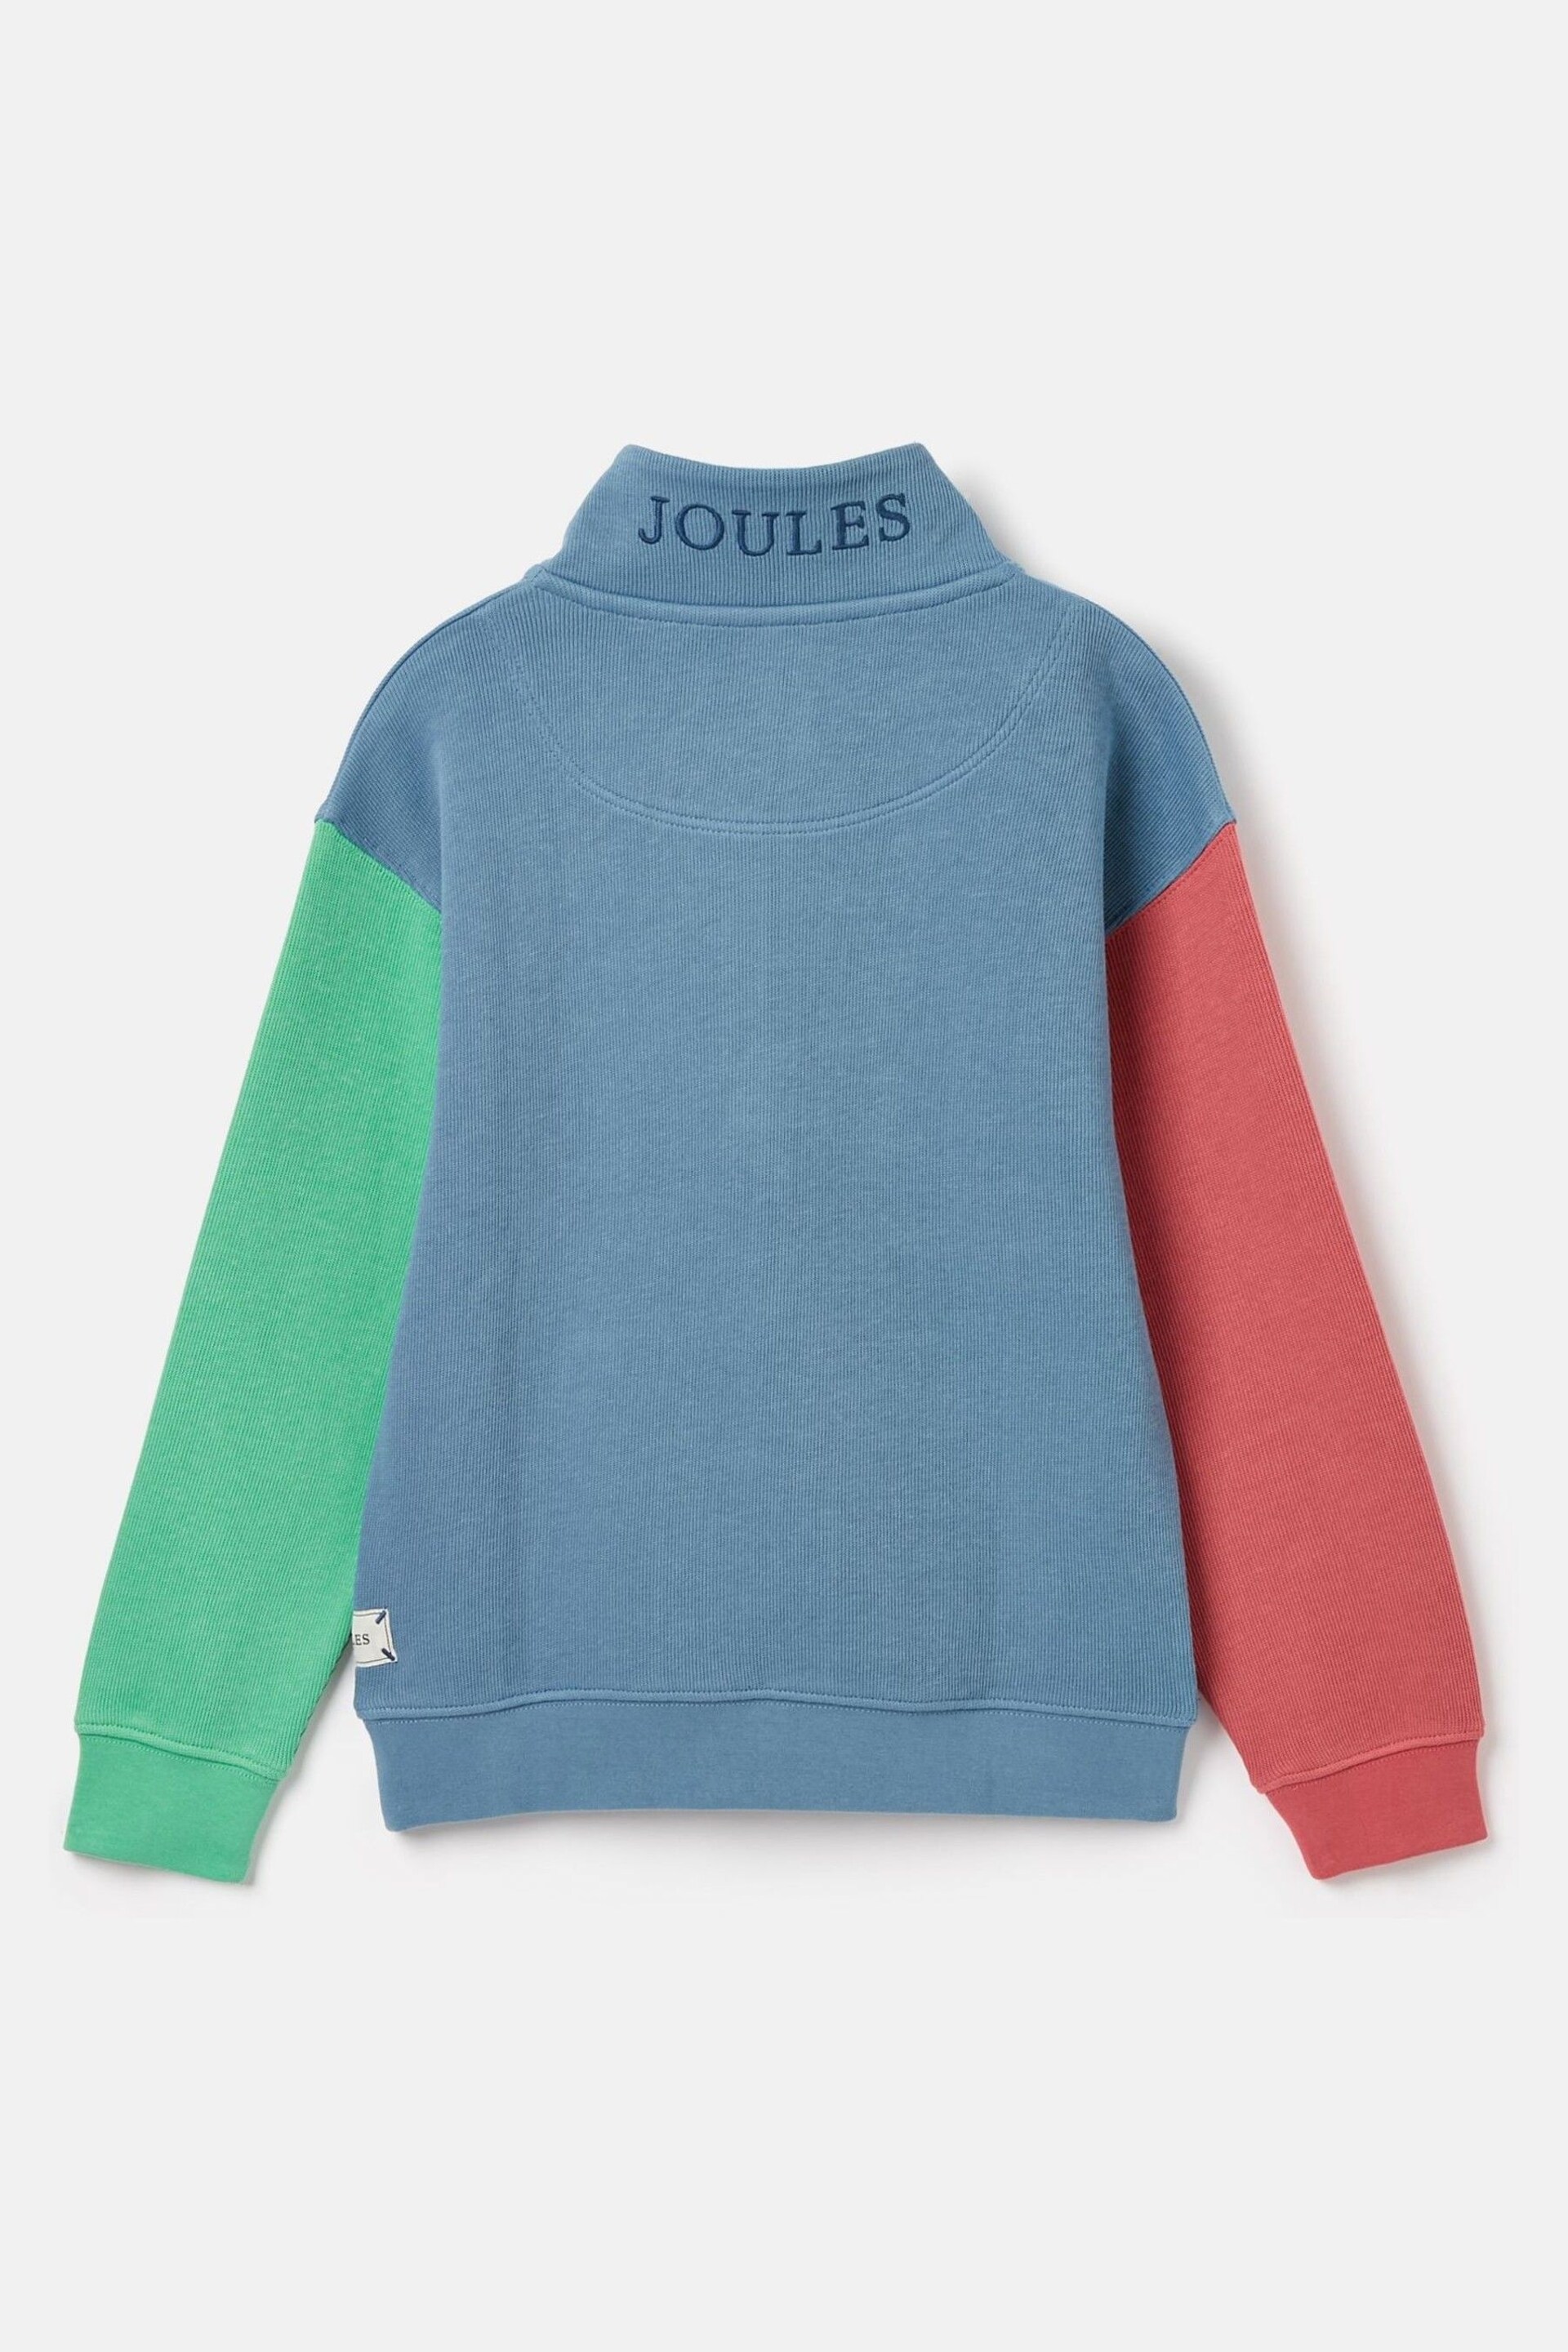 Joules Alistair Blue Boys' Quarter Zip Sweatshirt - Image 2 of 5